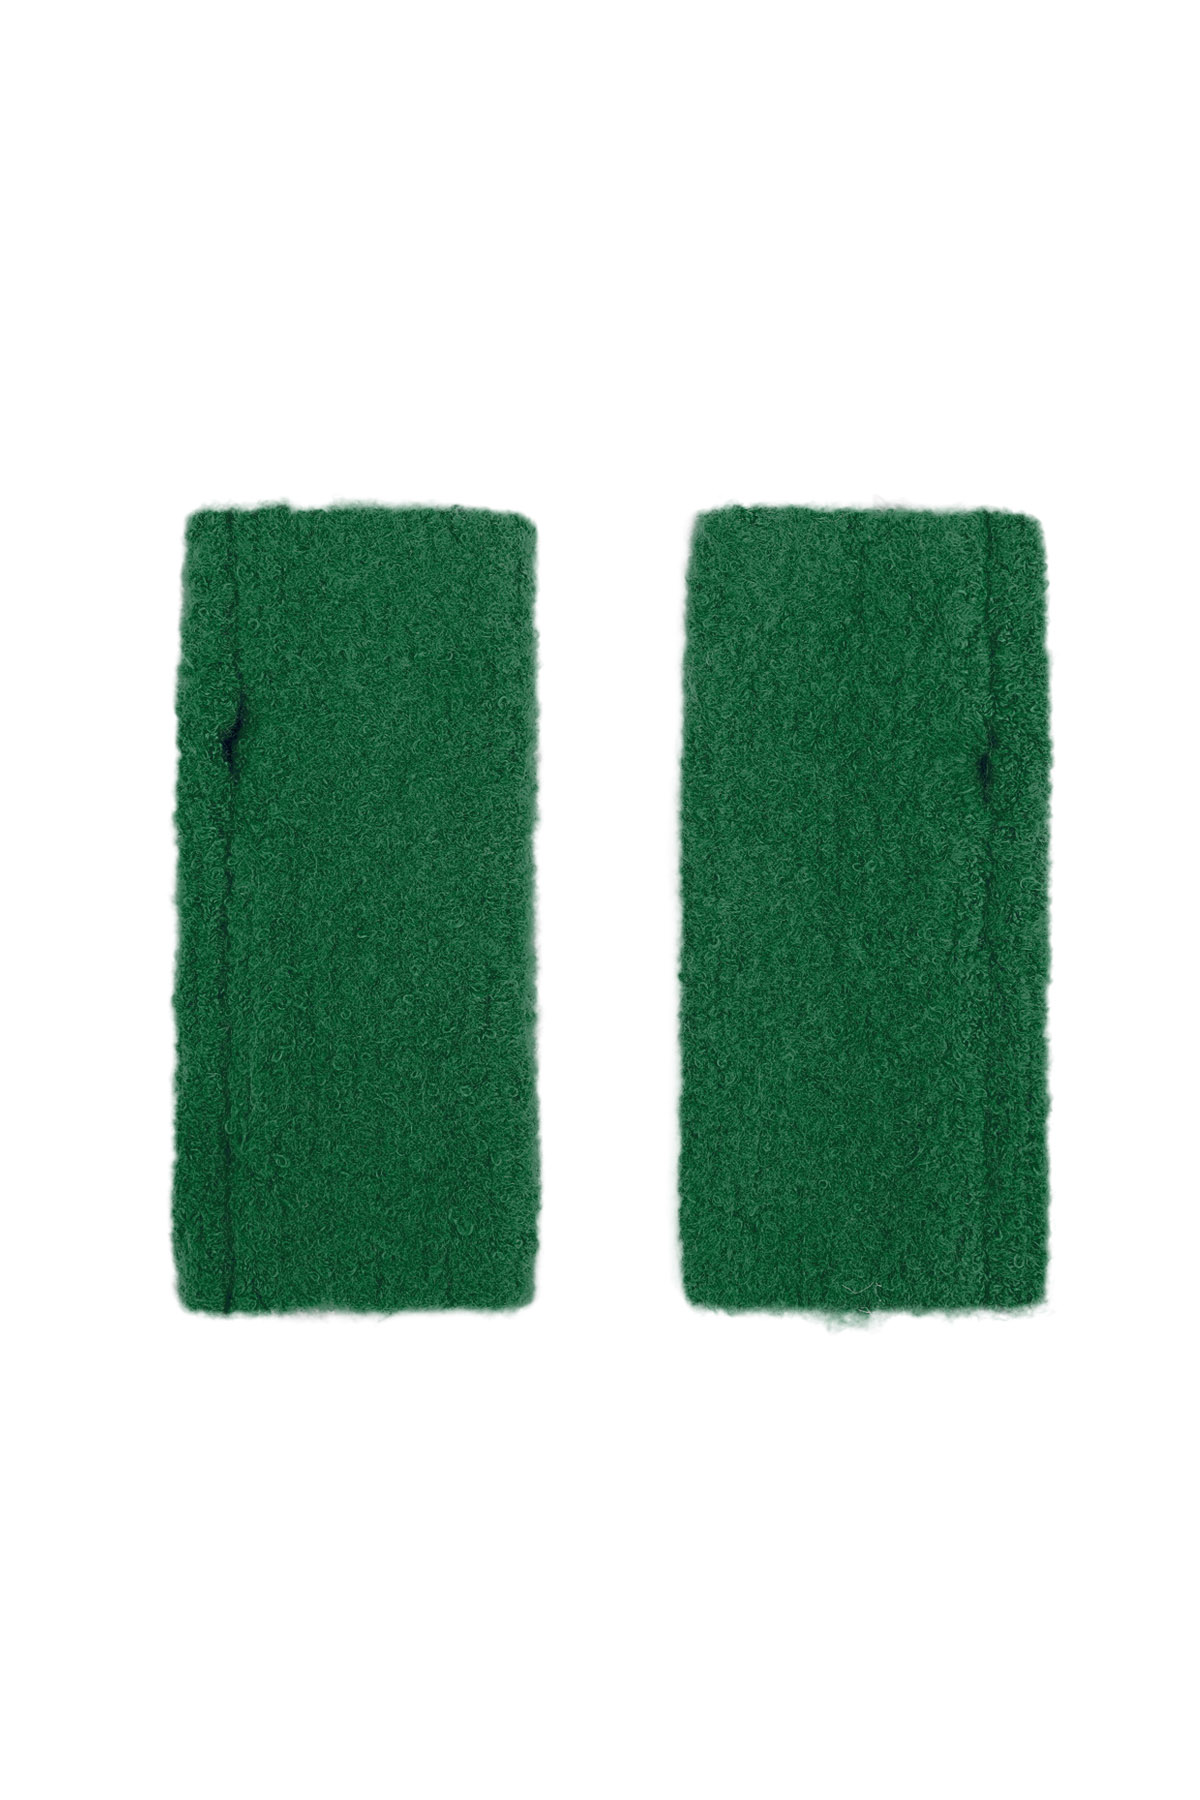 Delikli eldiven - koyu yeşil h5 